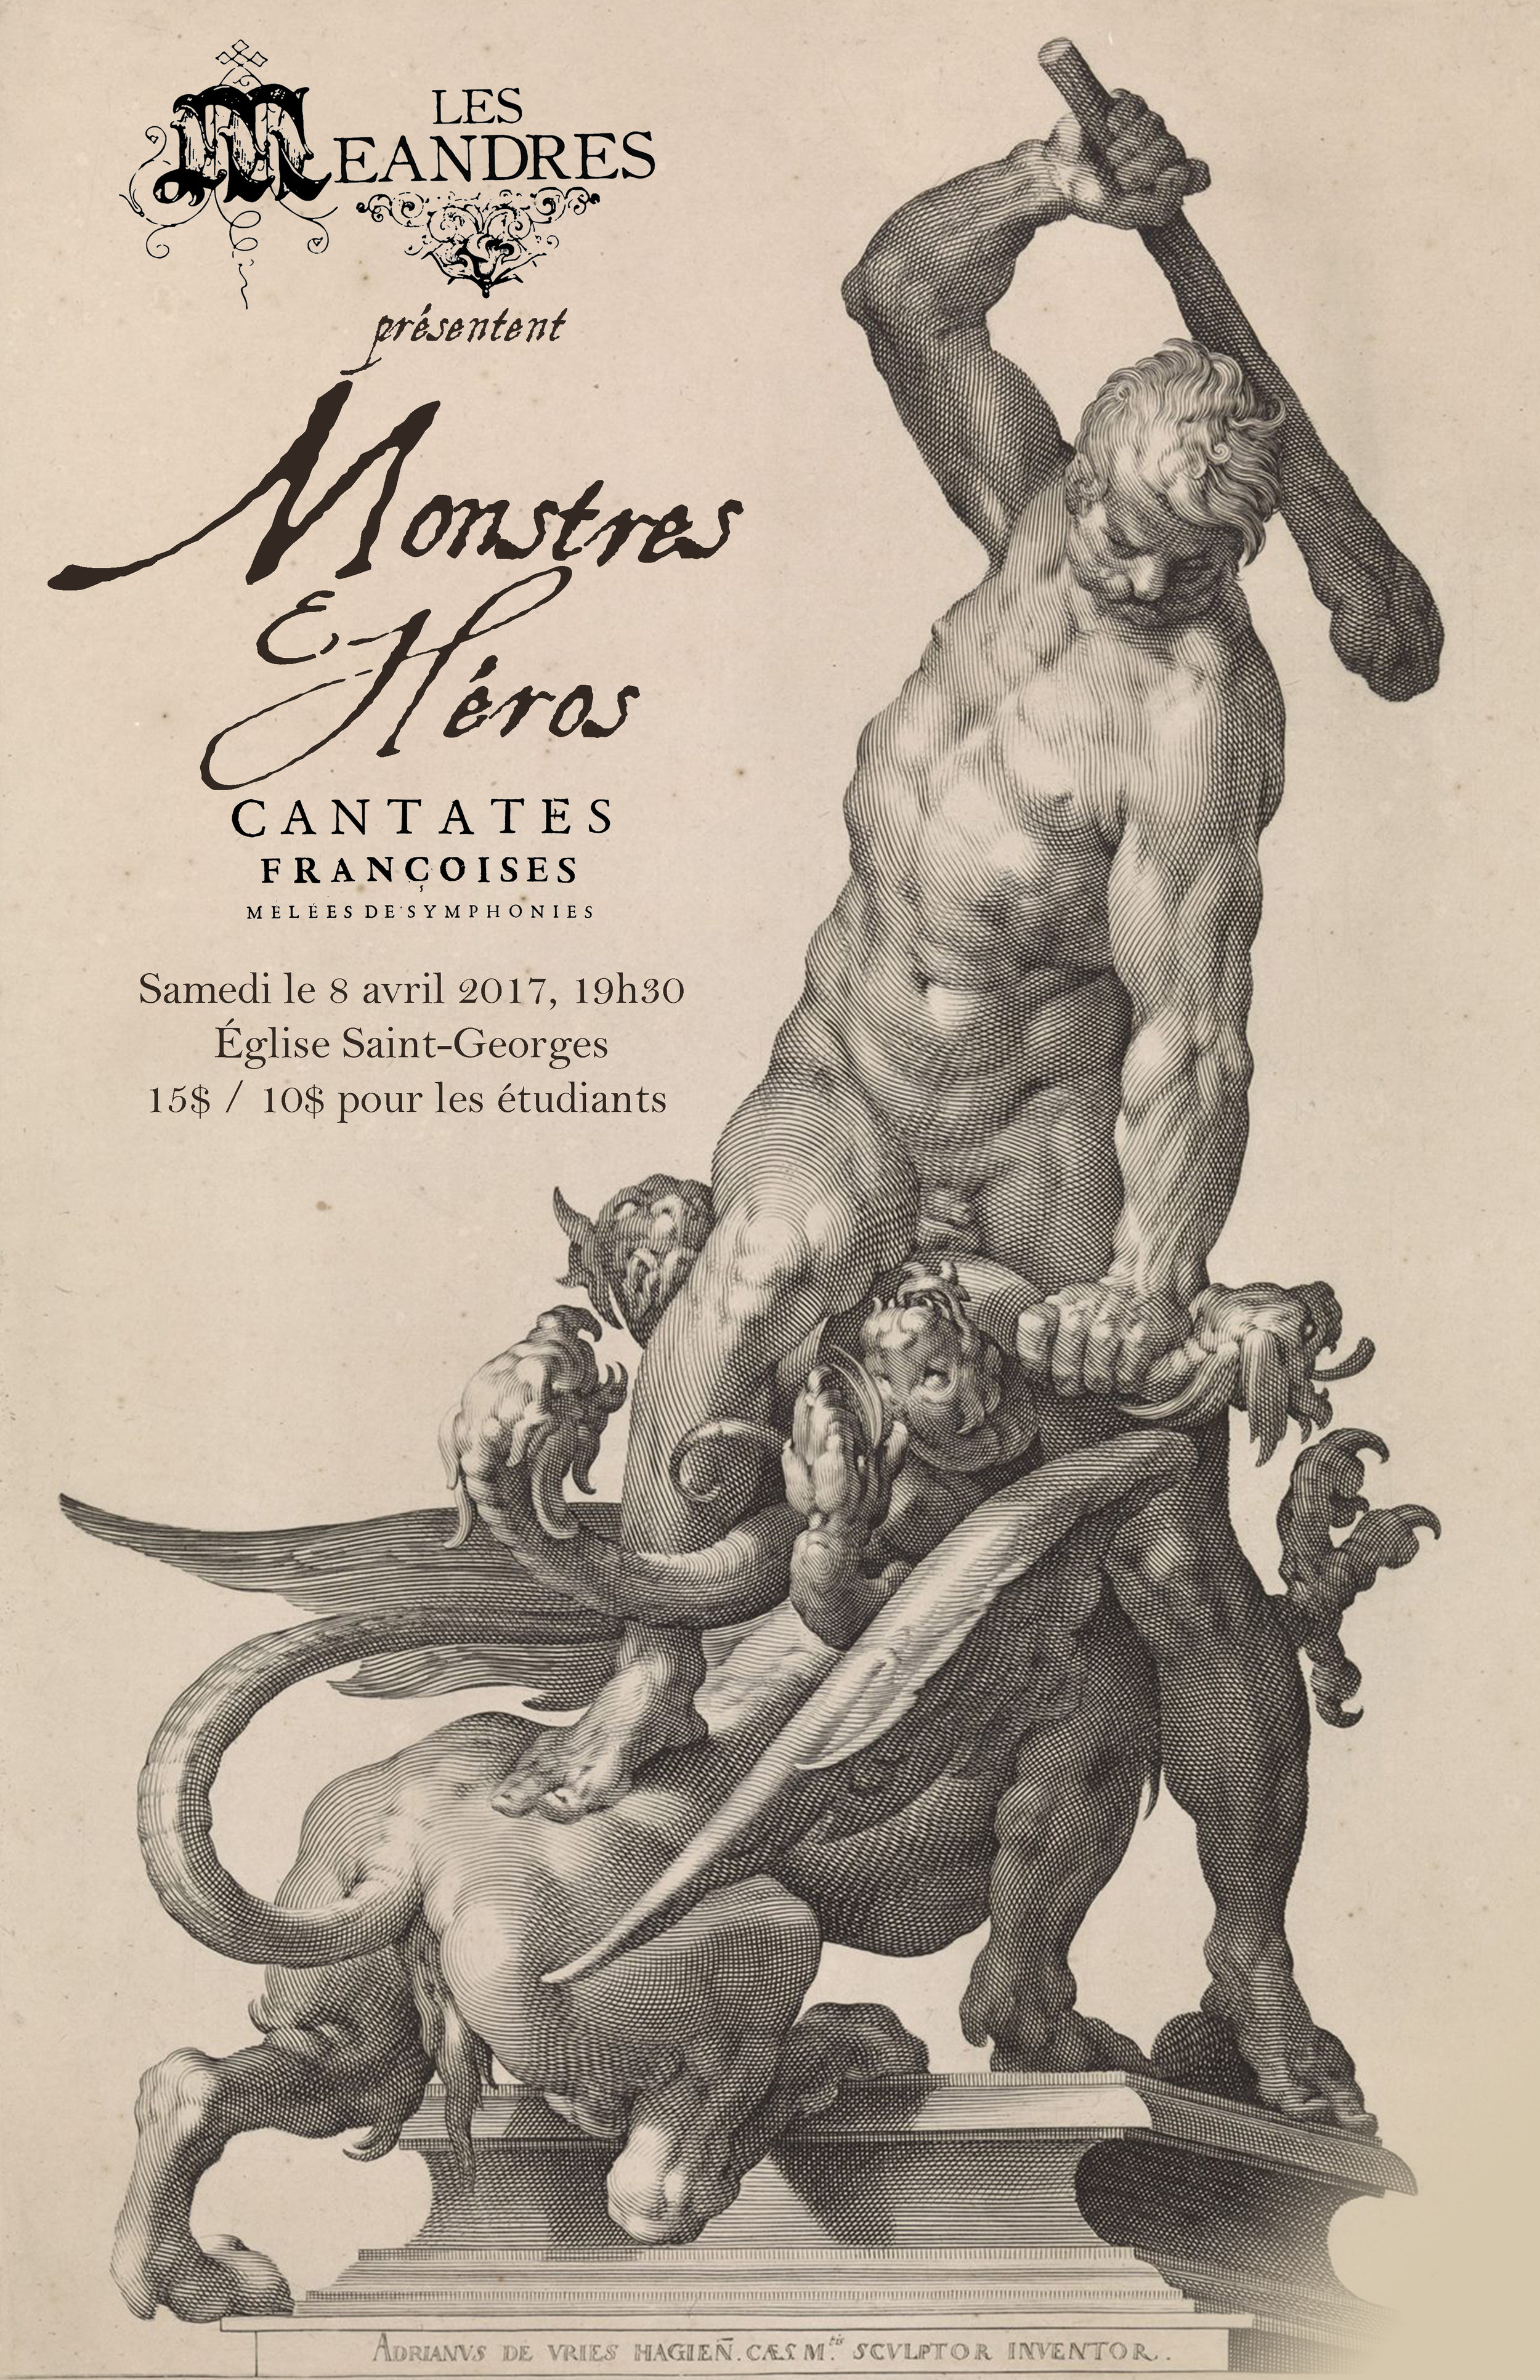 Monstres et Heroes poster (correct day).jpg